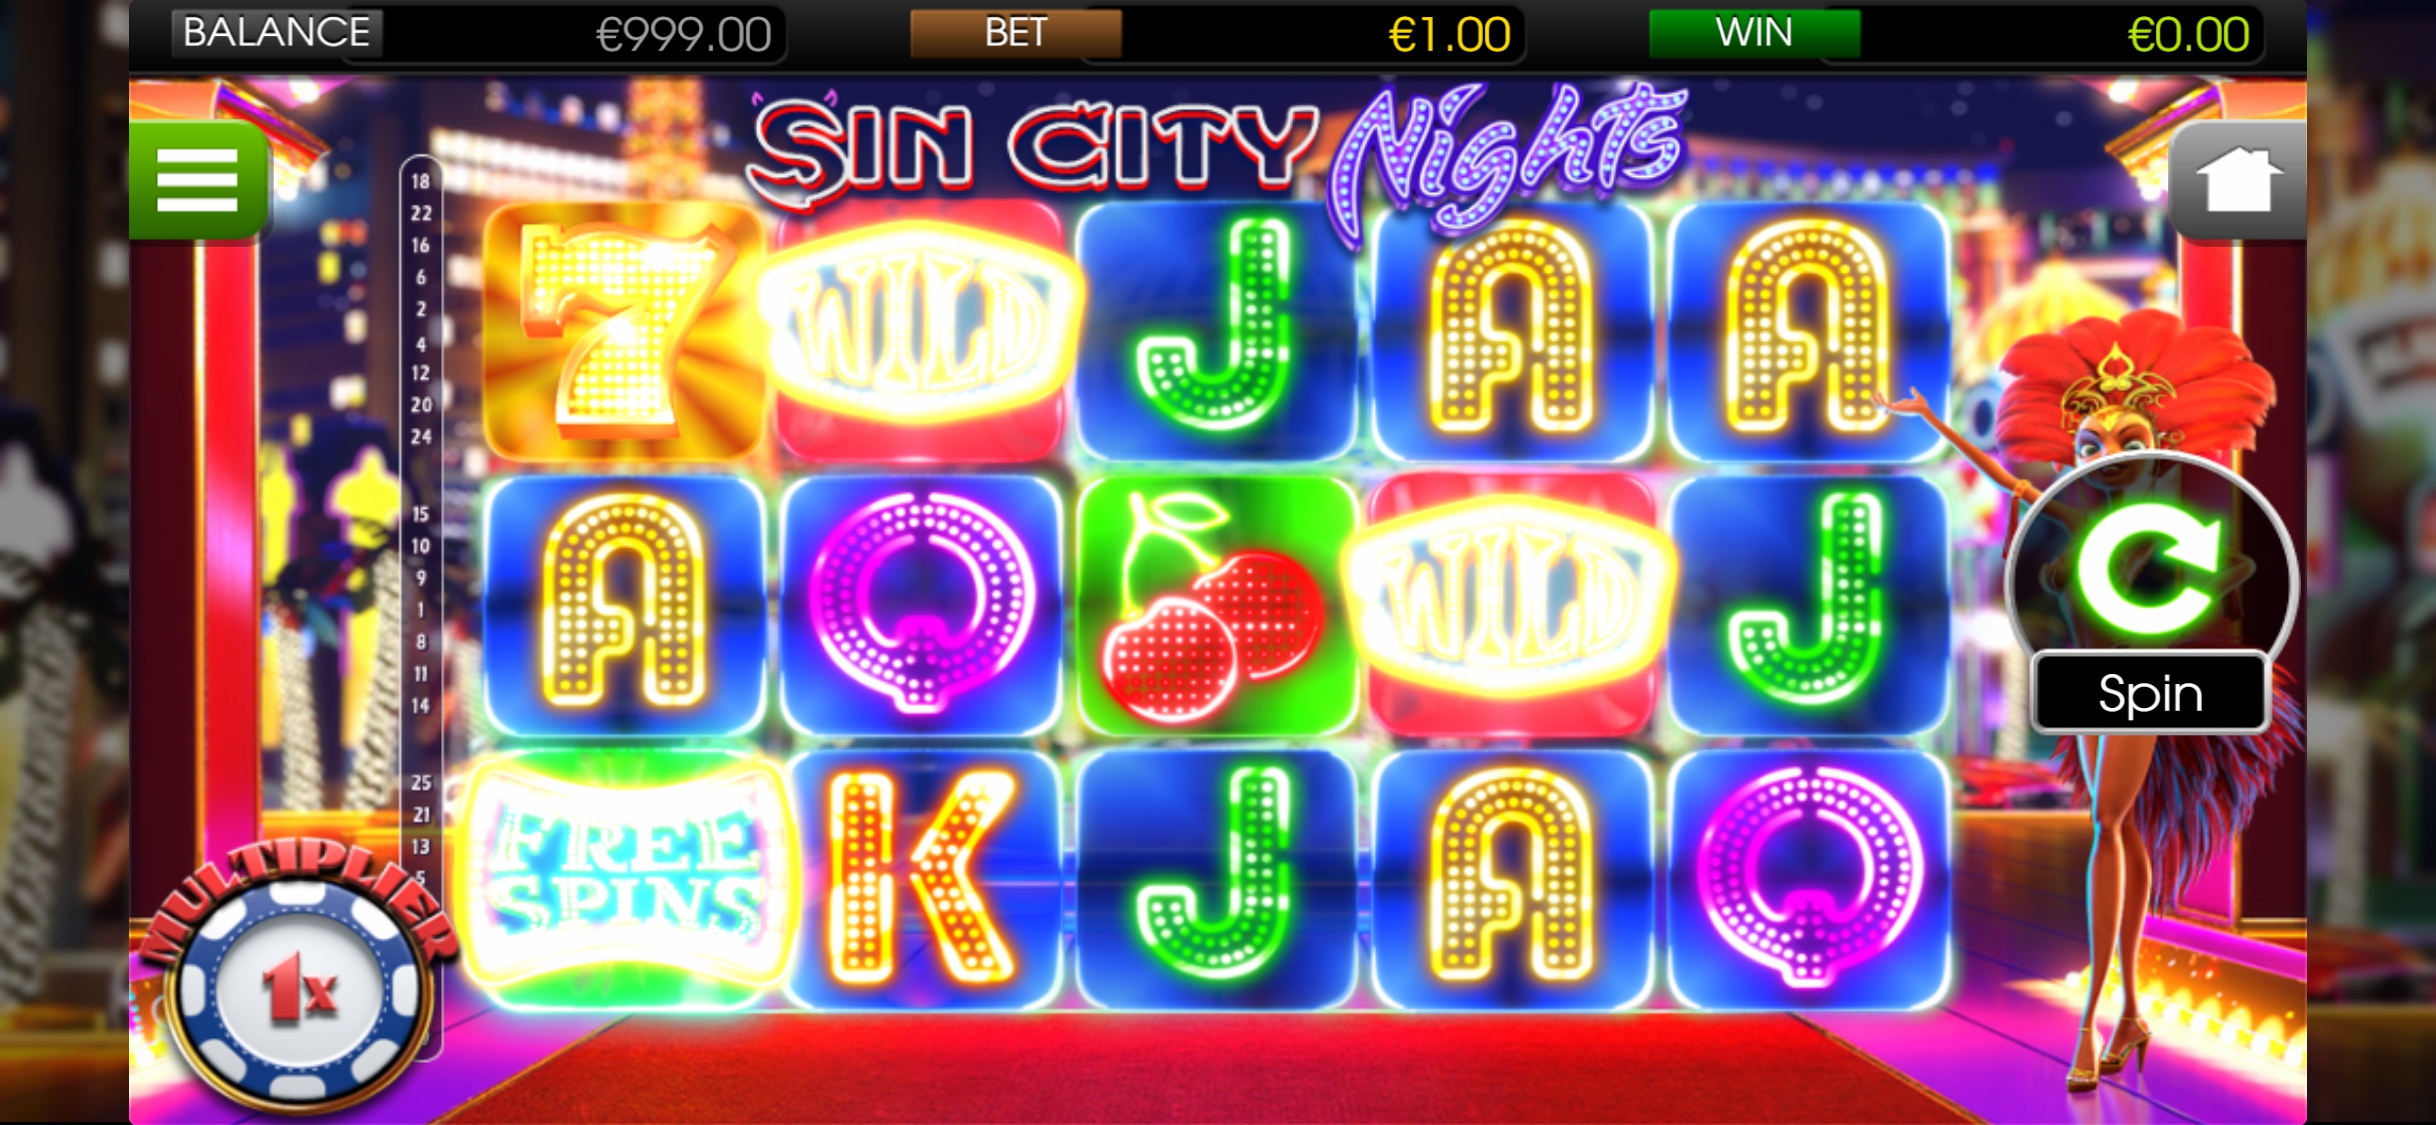 mBit Casino Mobile Slot Games Review